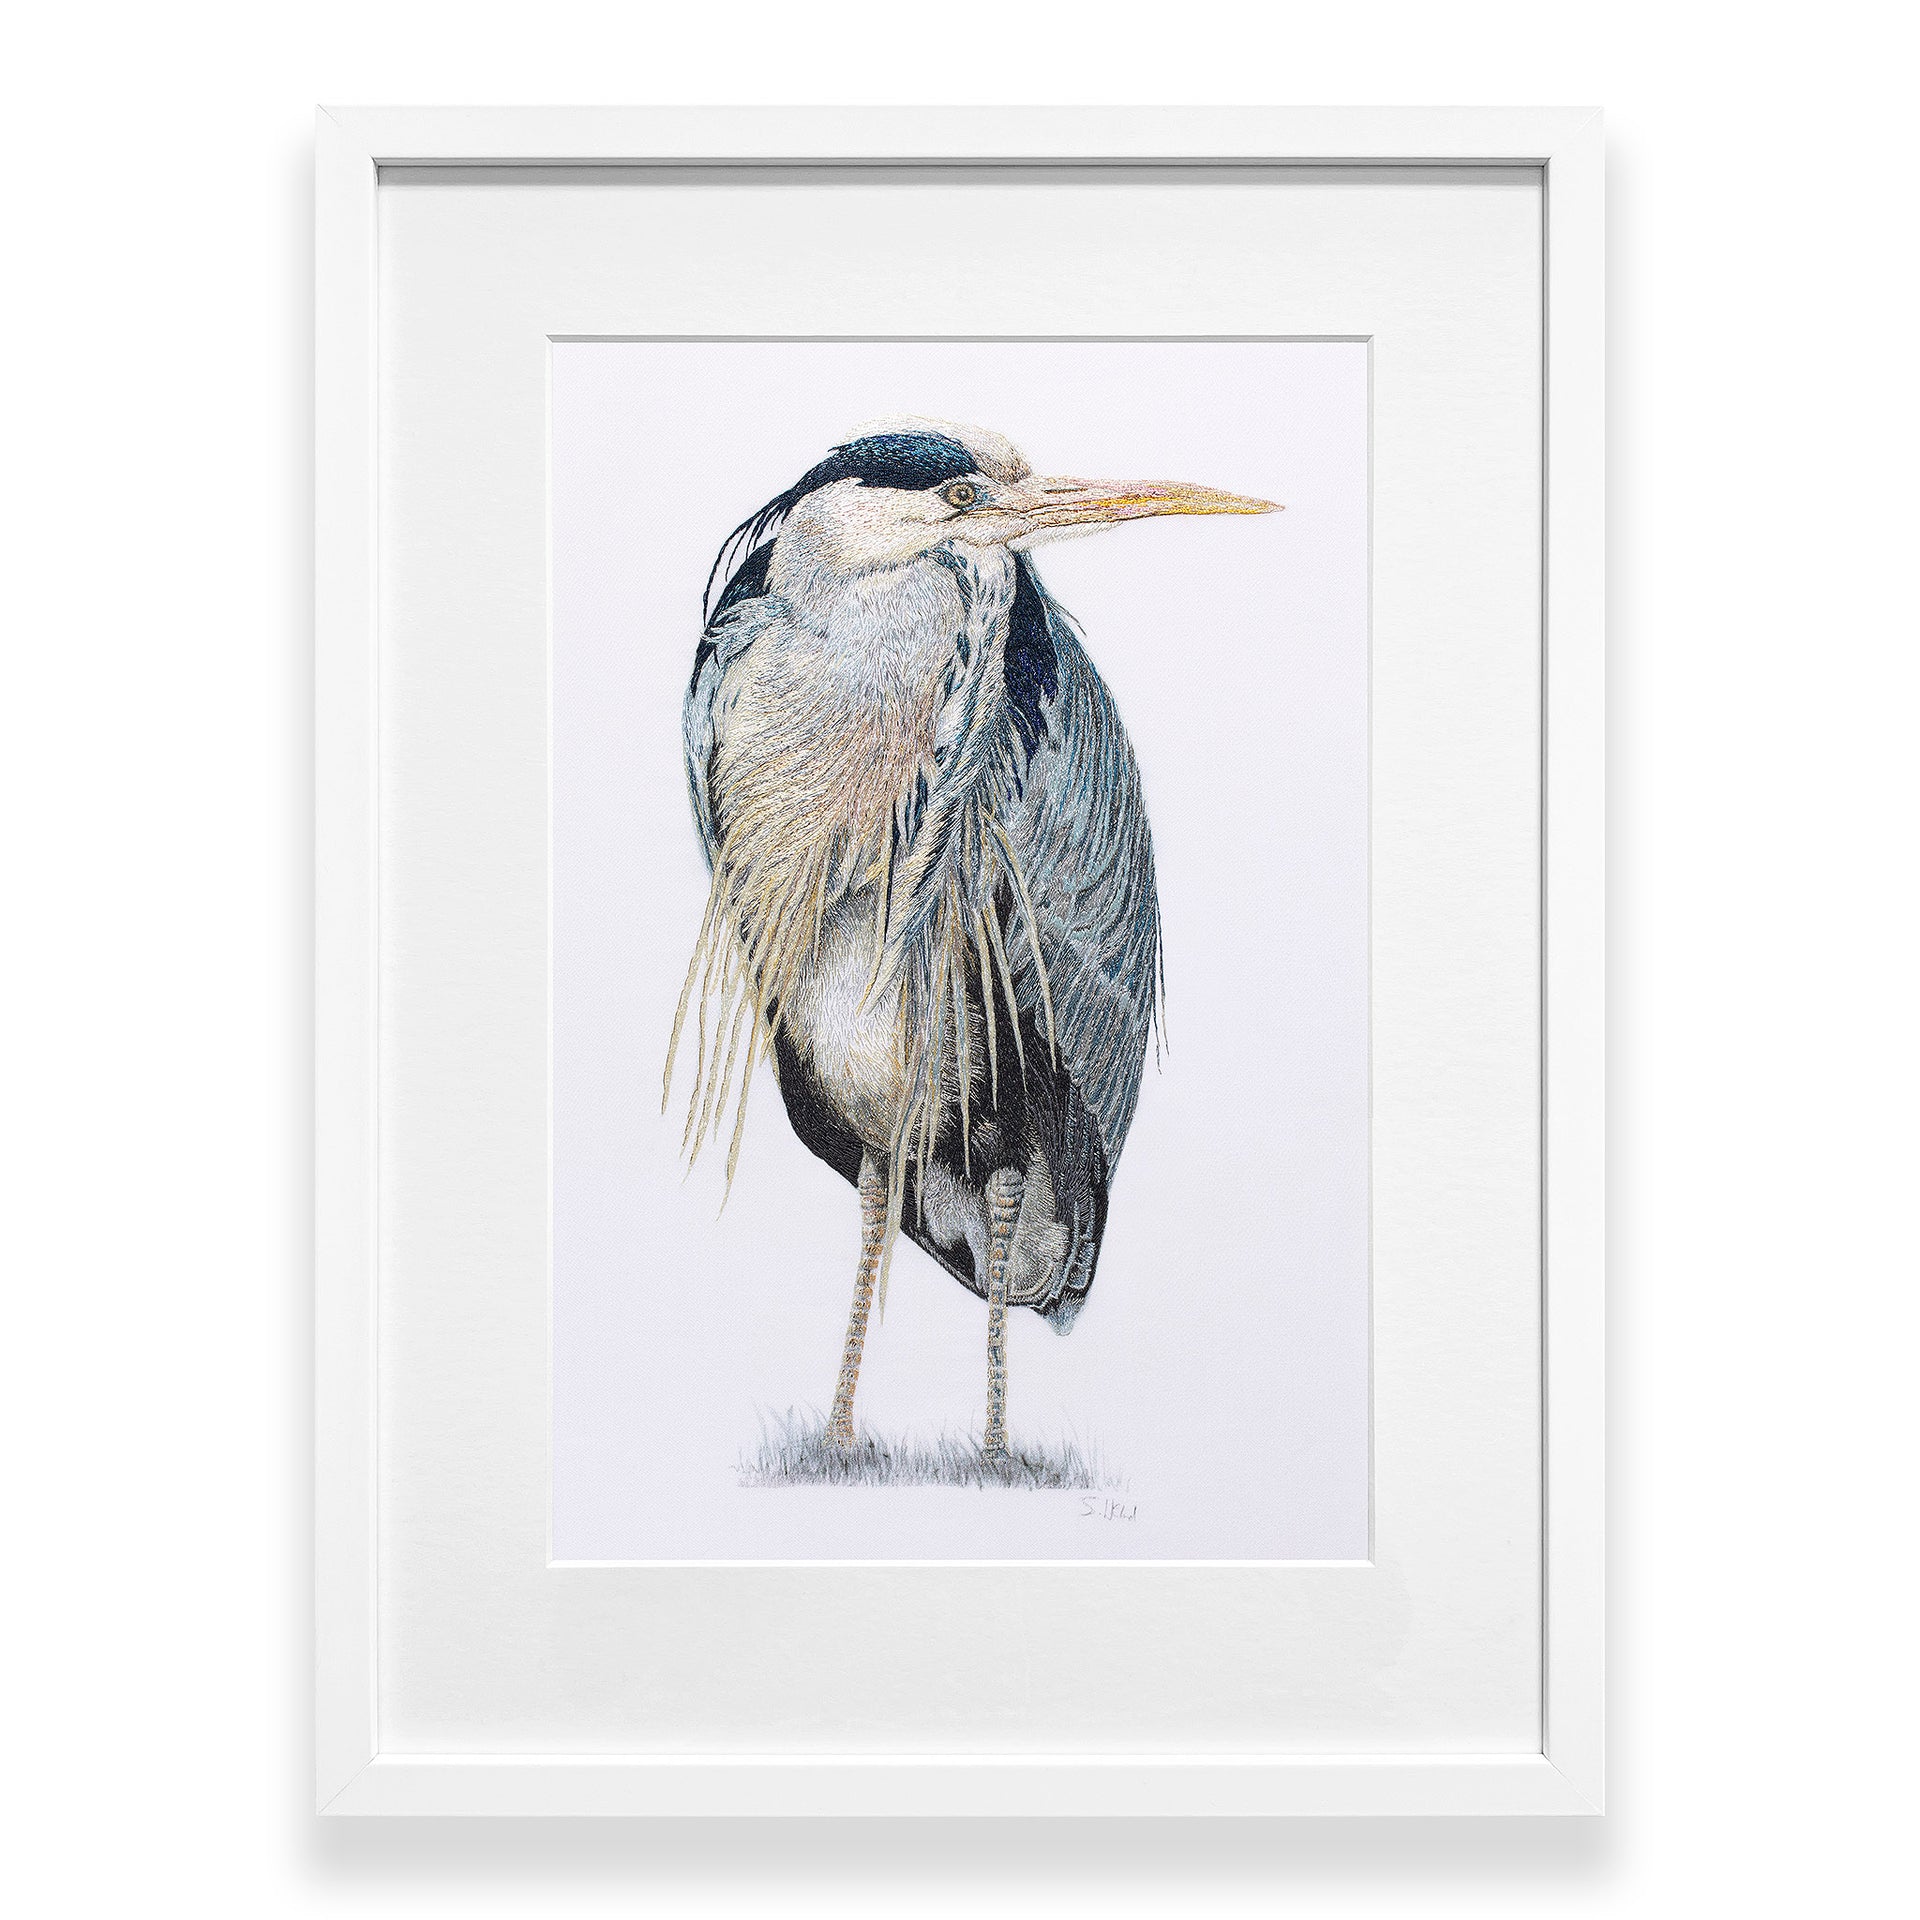 Original hand embroidered heron artwork in white frame